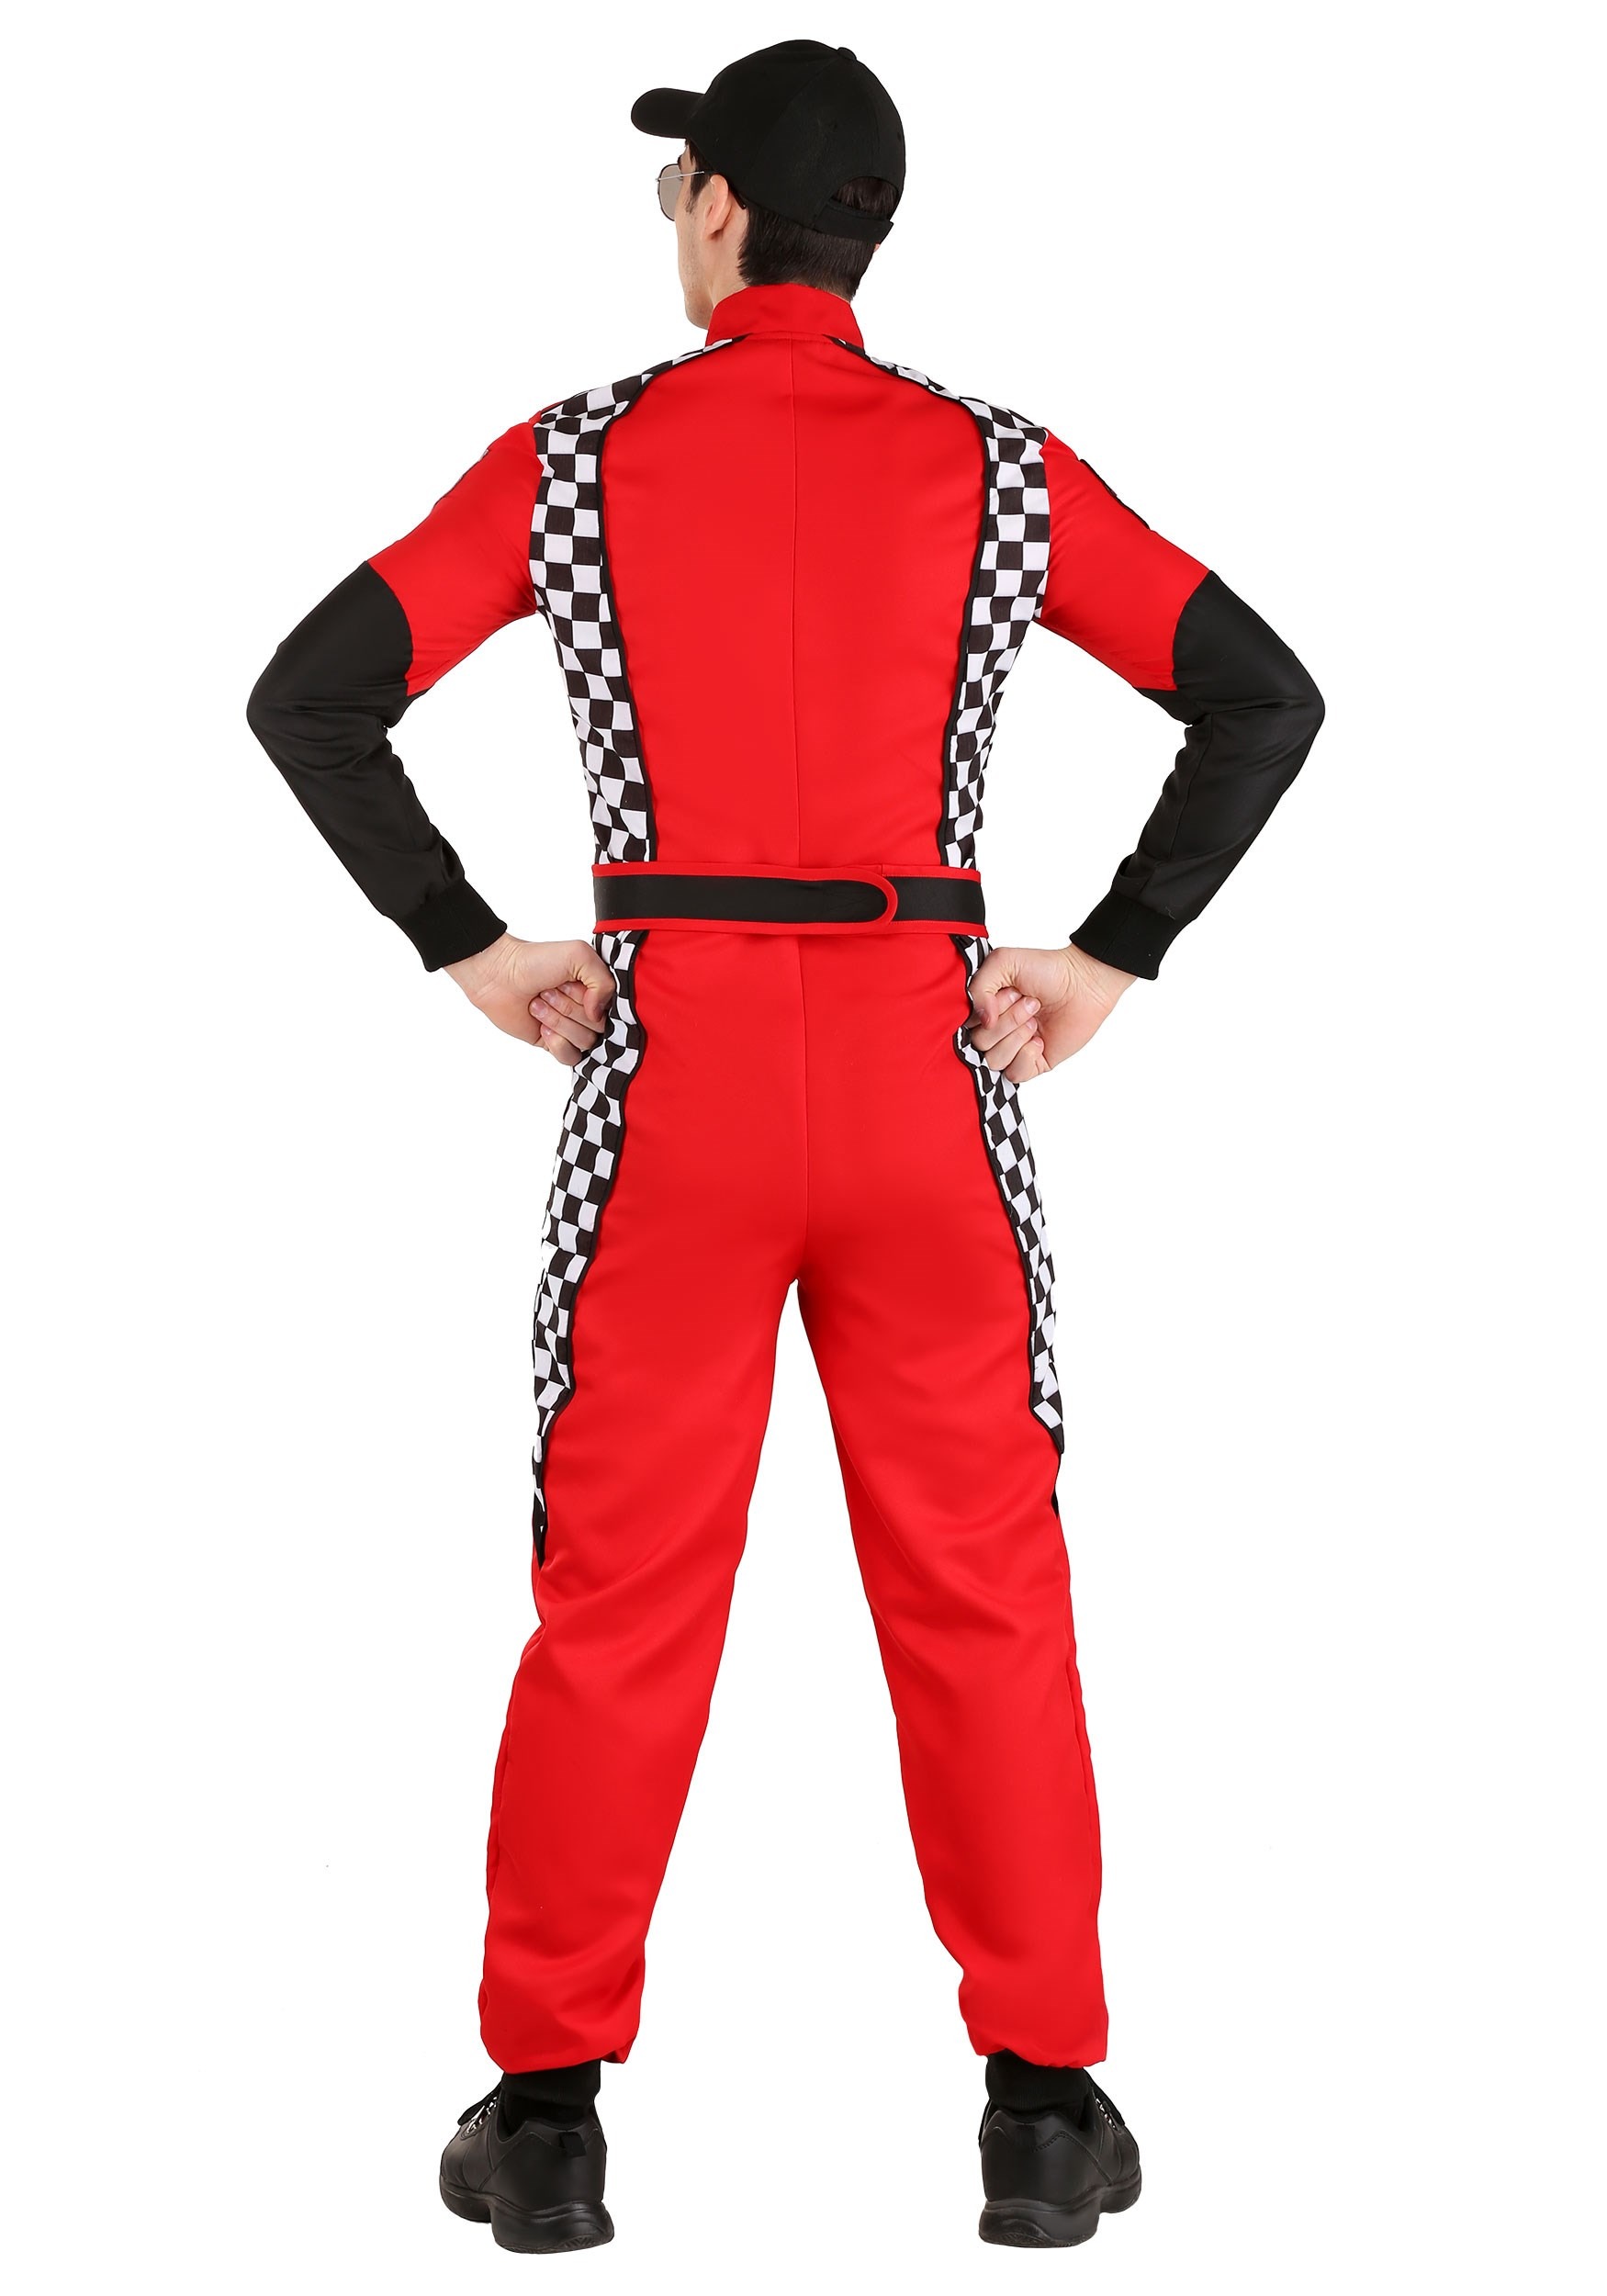 Swift Race Car Driver Men's Costume